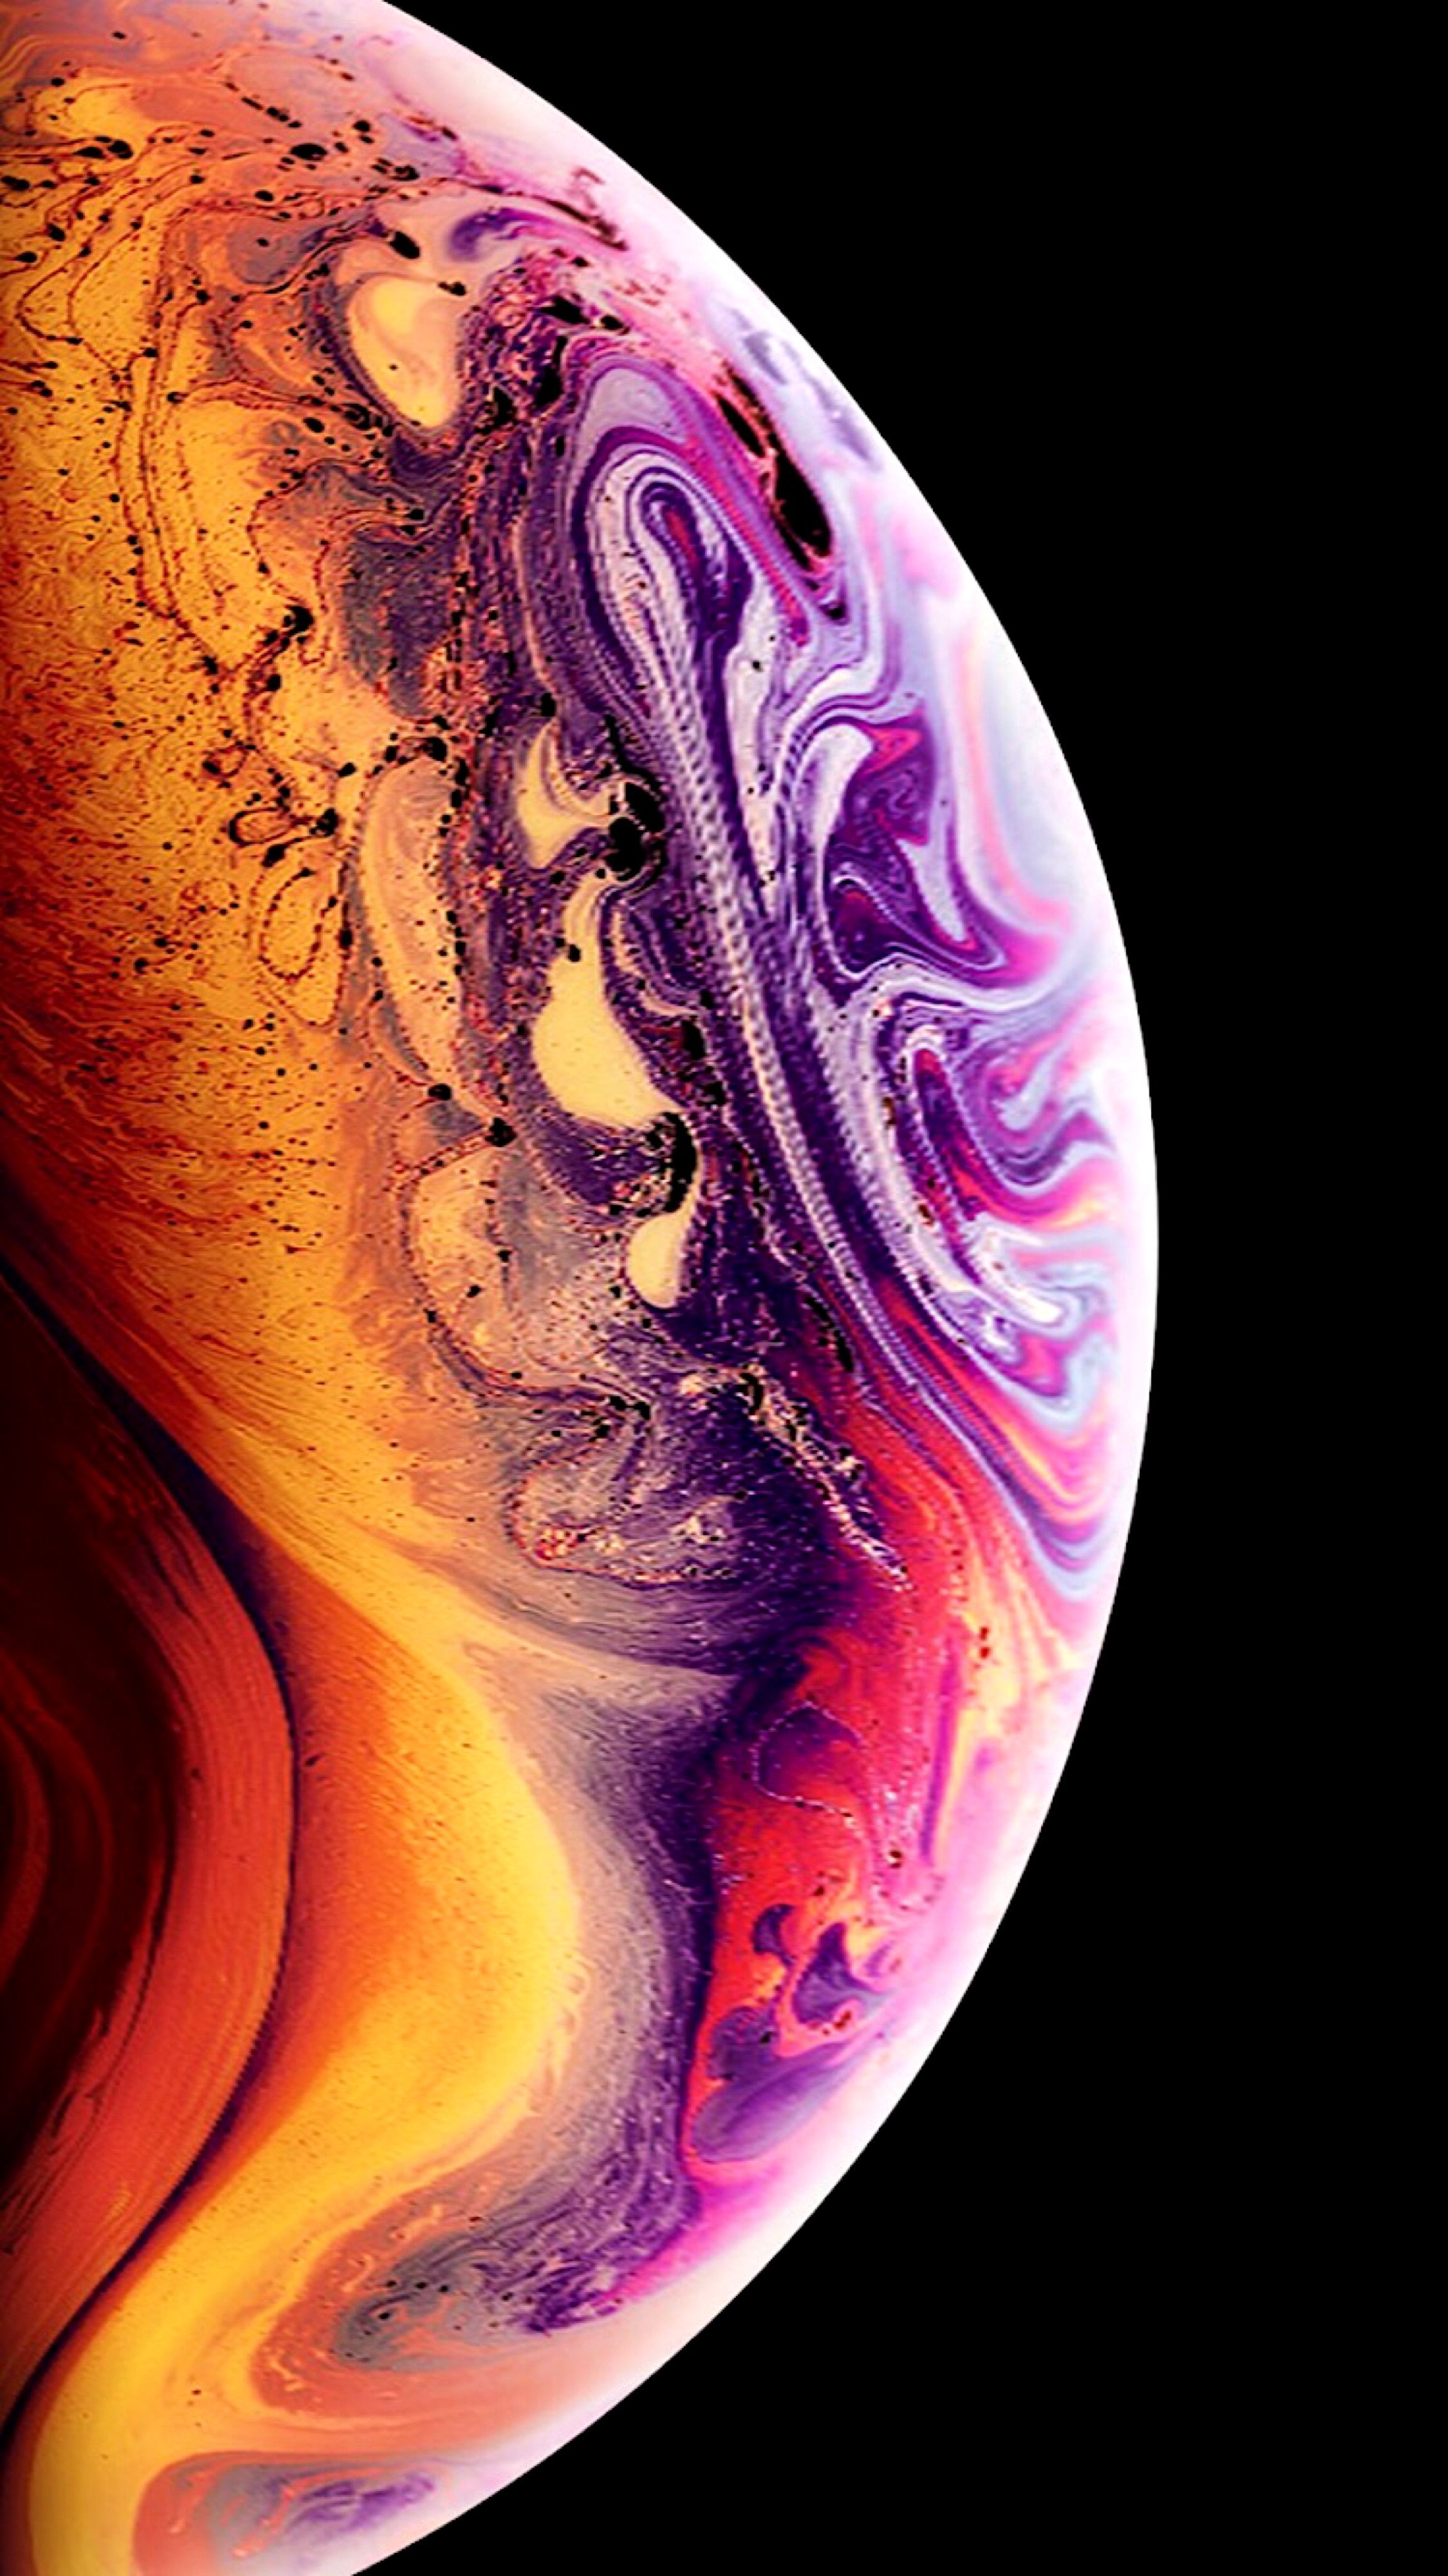 Apple Wallpaper 4K iPhone X Gallery. Apple wallpaper